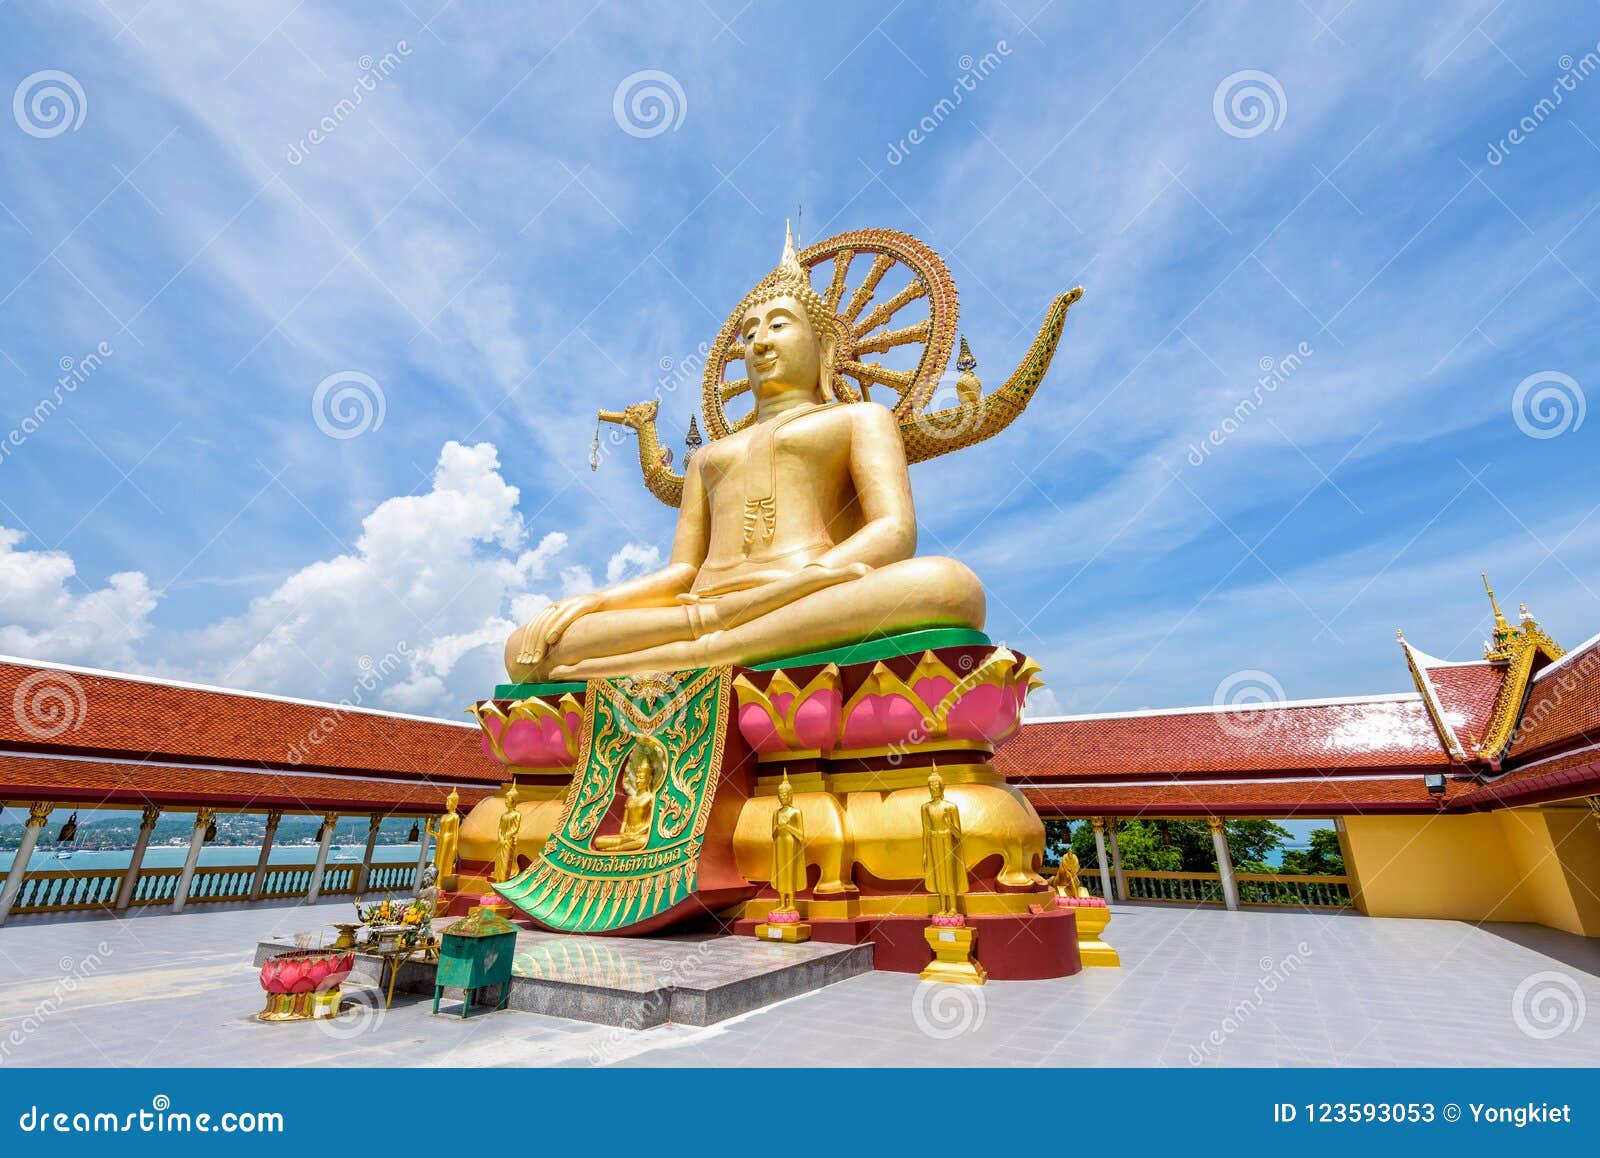 big buddha temple at koh samui